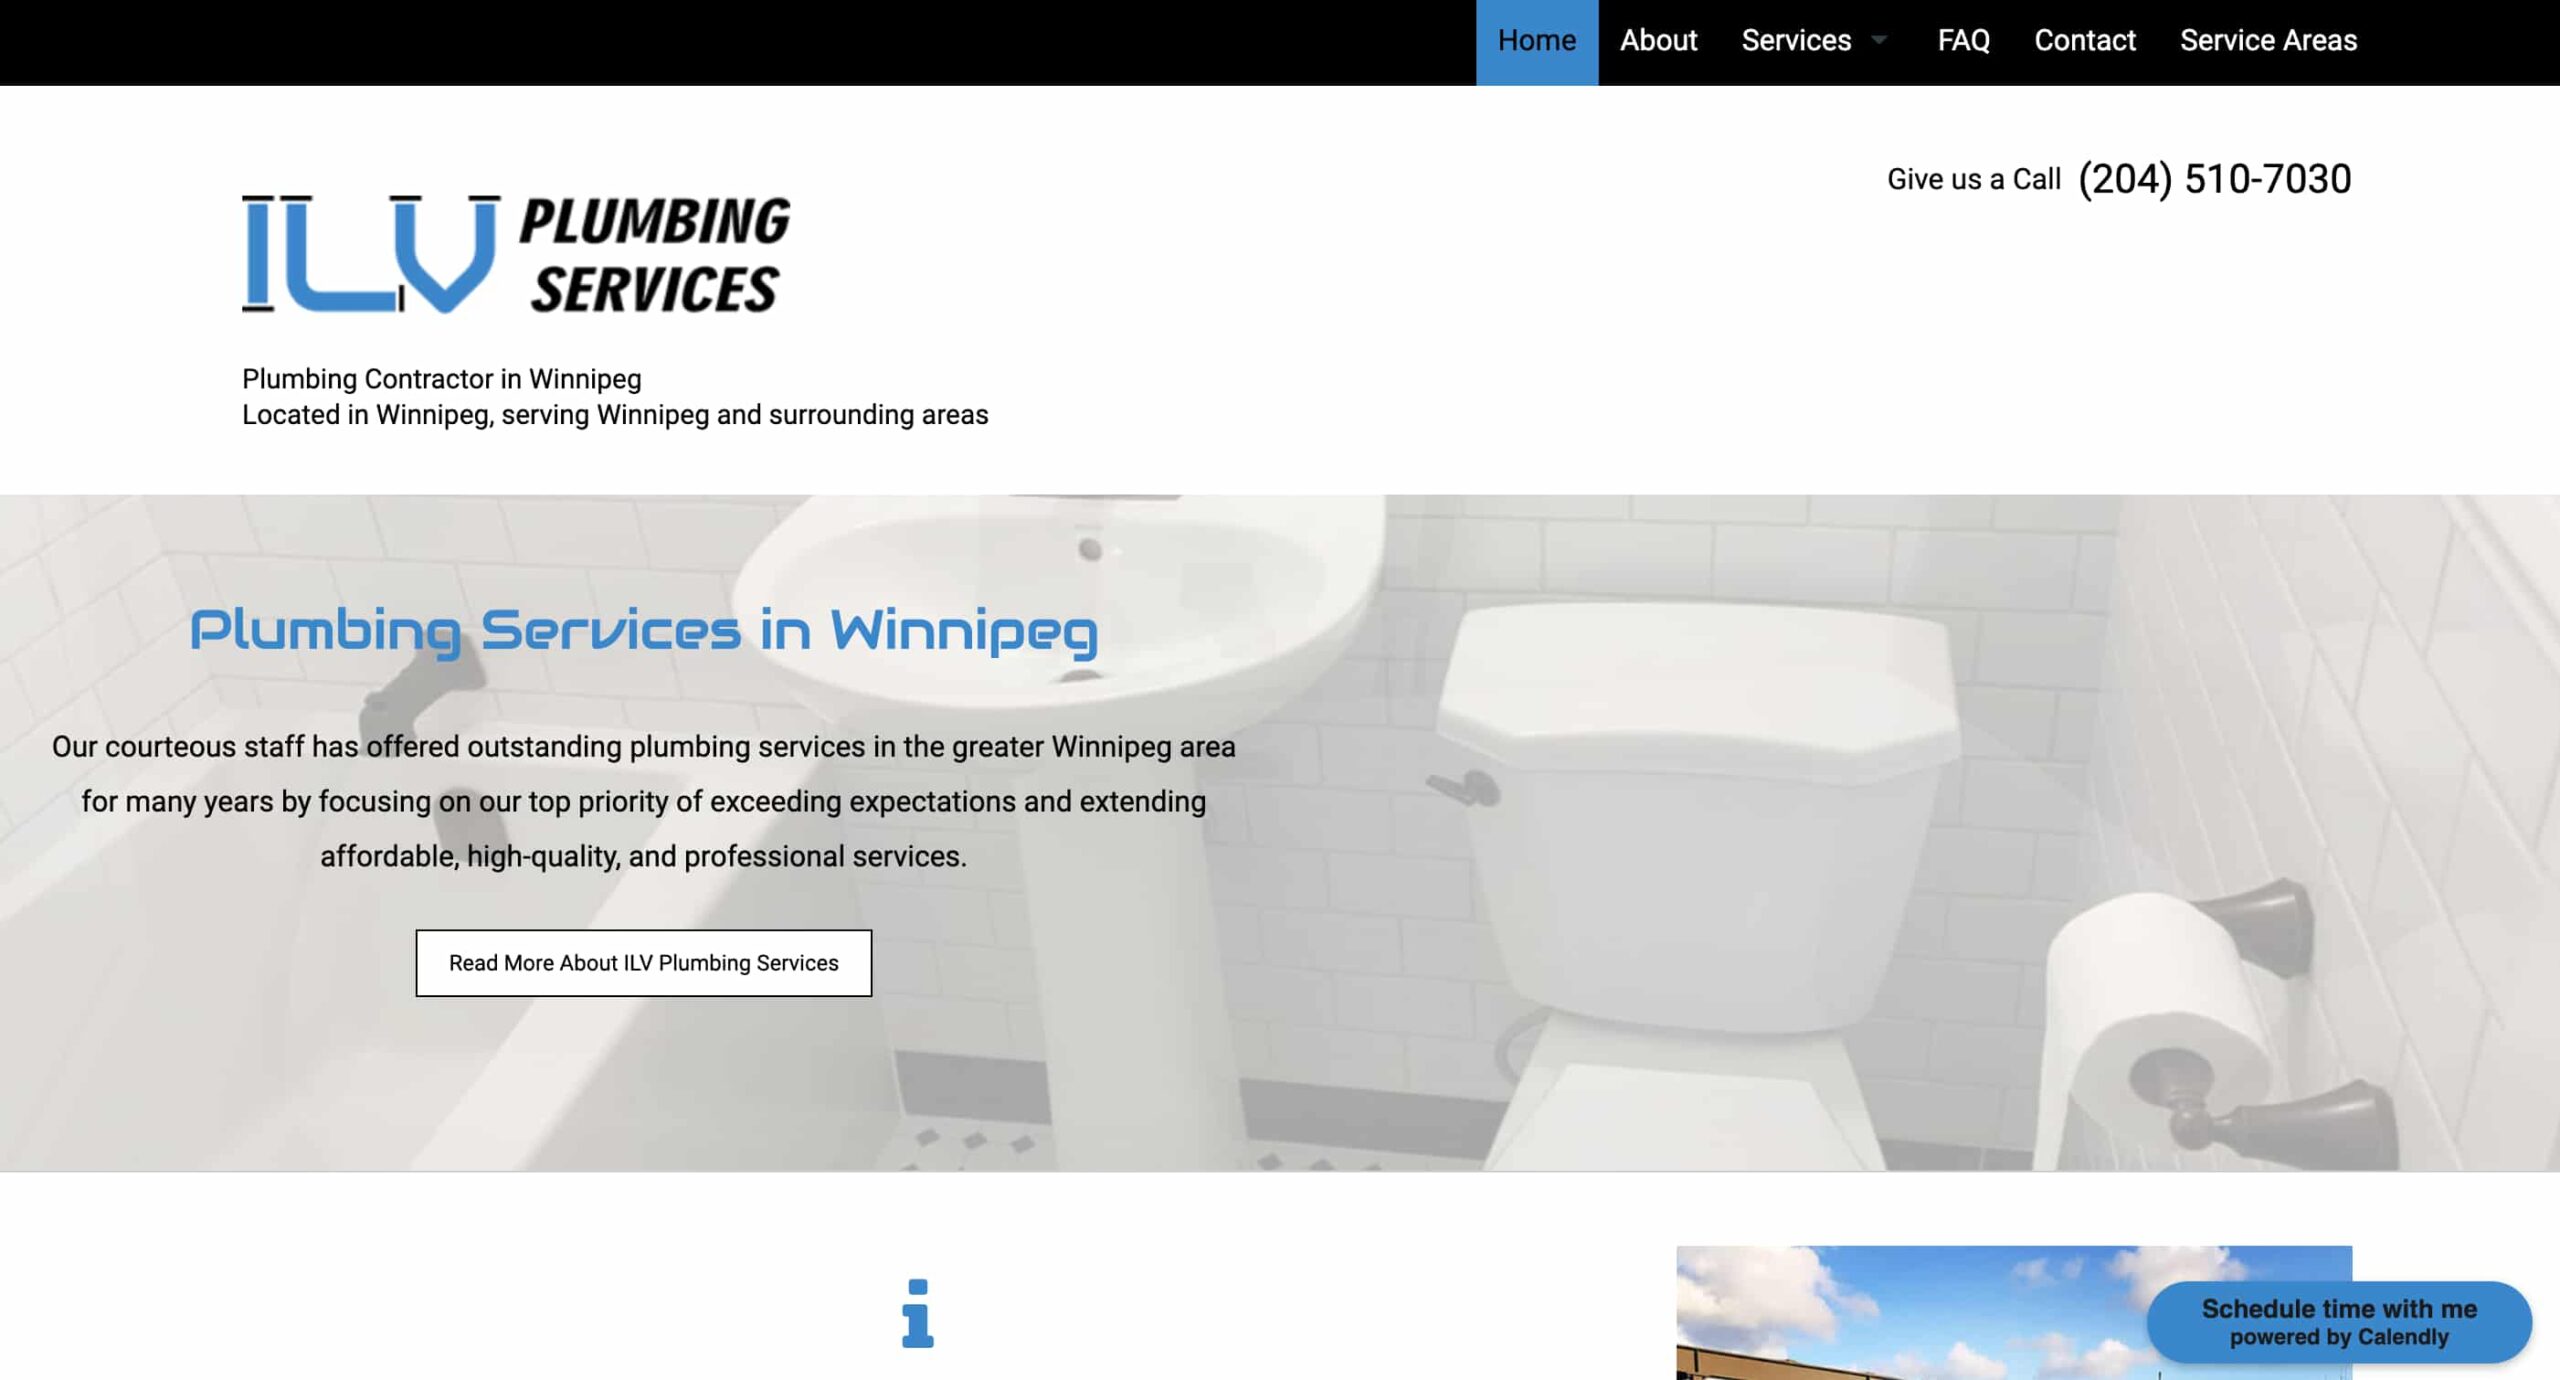 ILV Plumbing Services